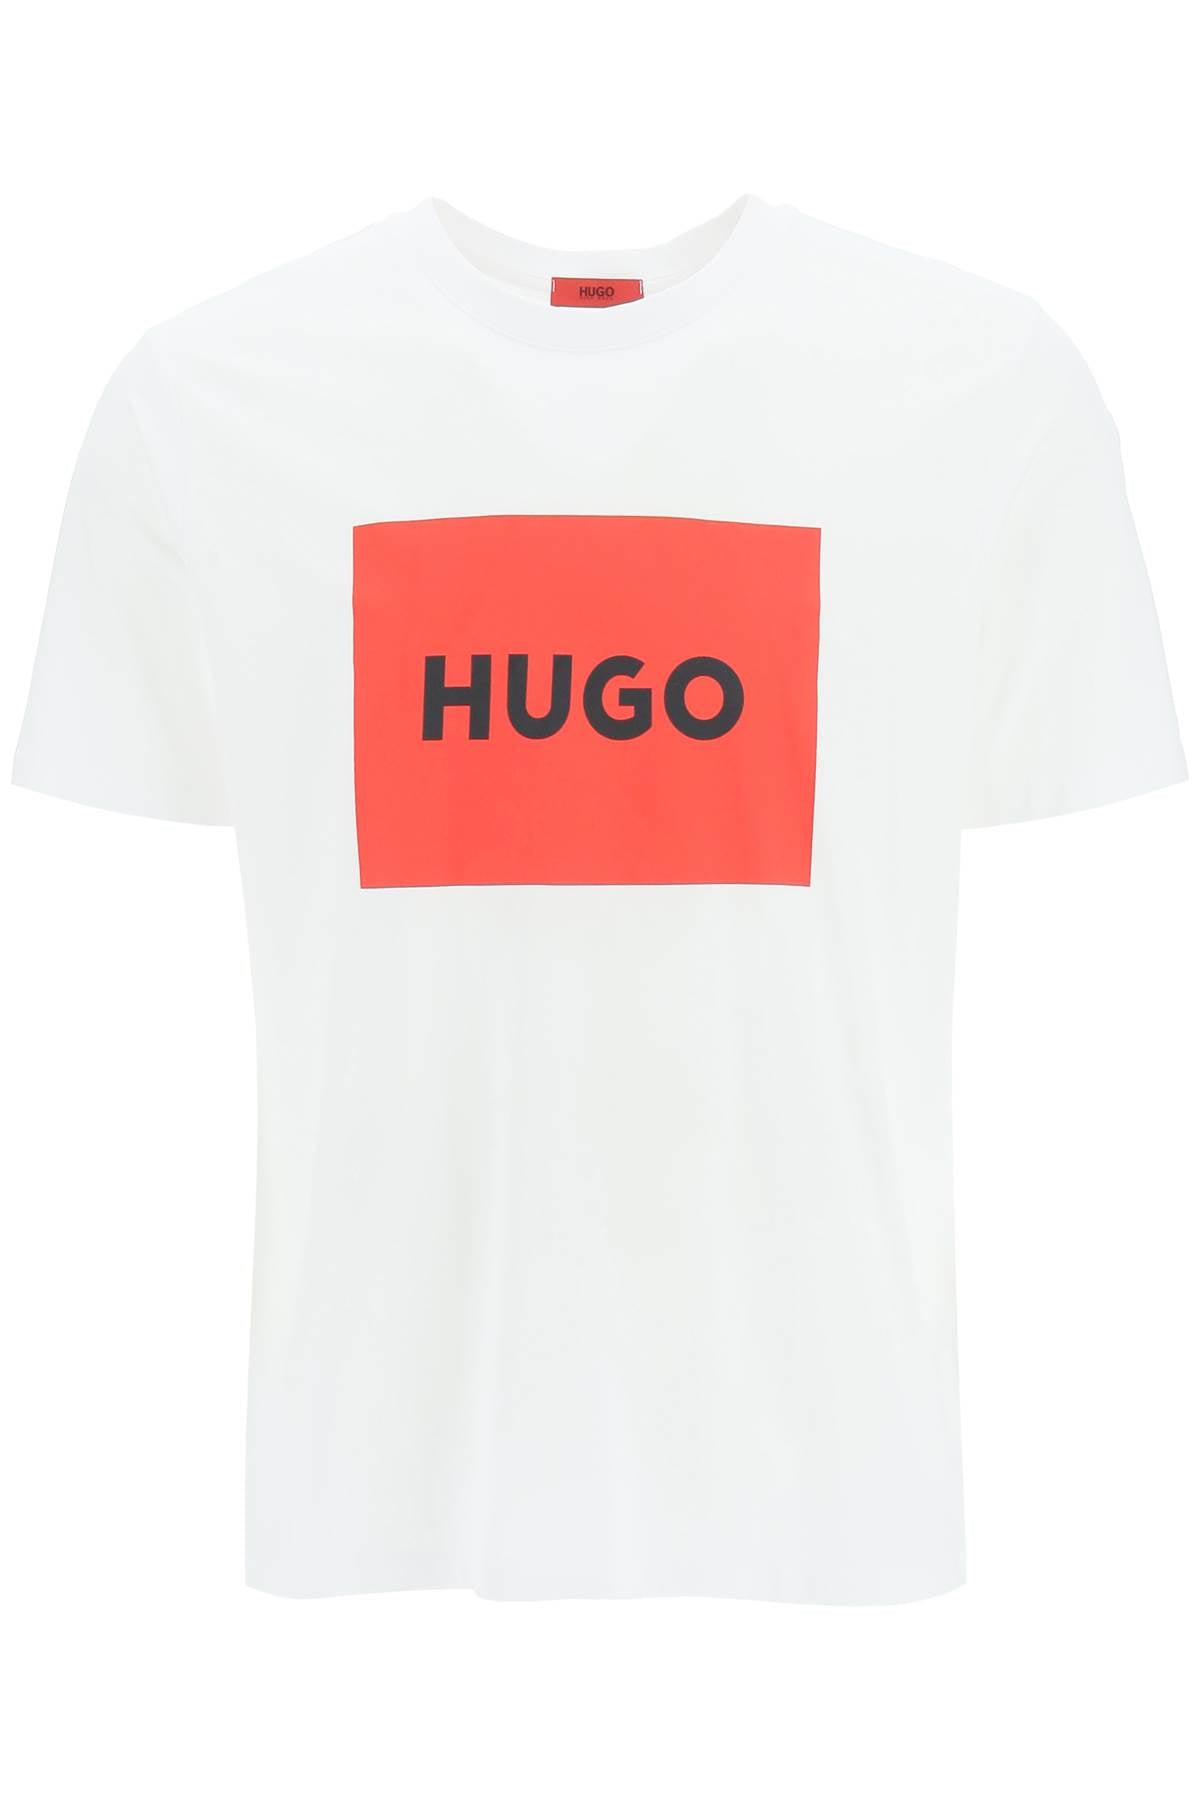 Hugo dulive t-shirt with logo box-0